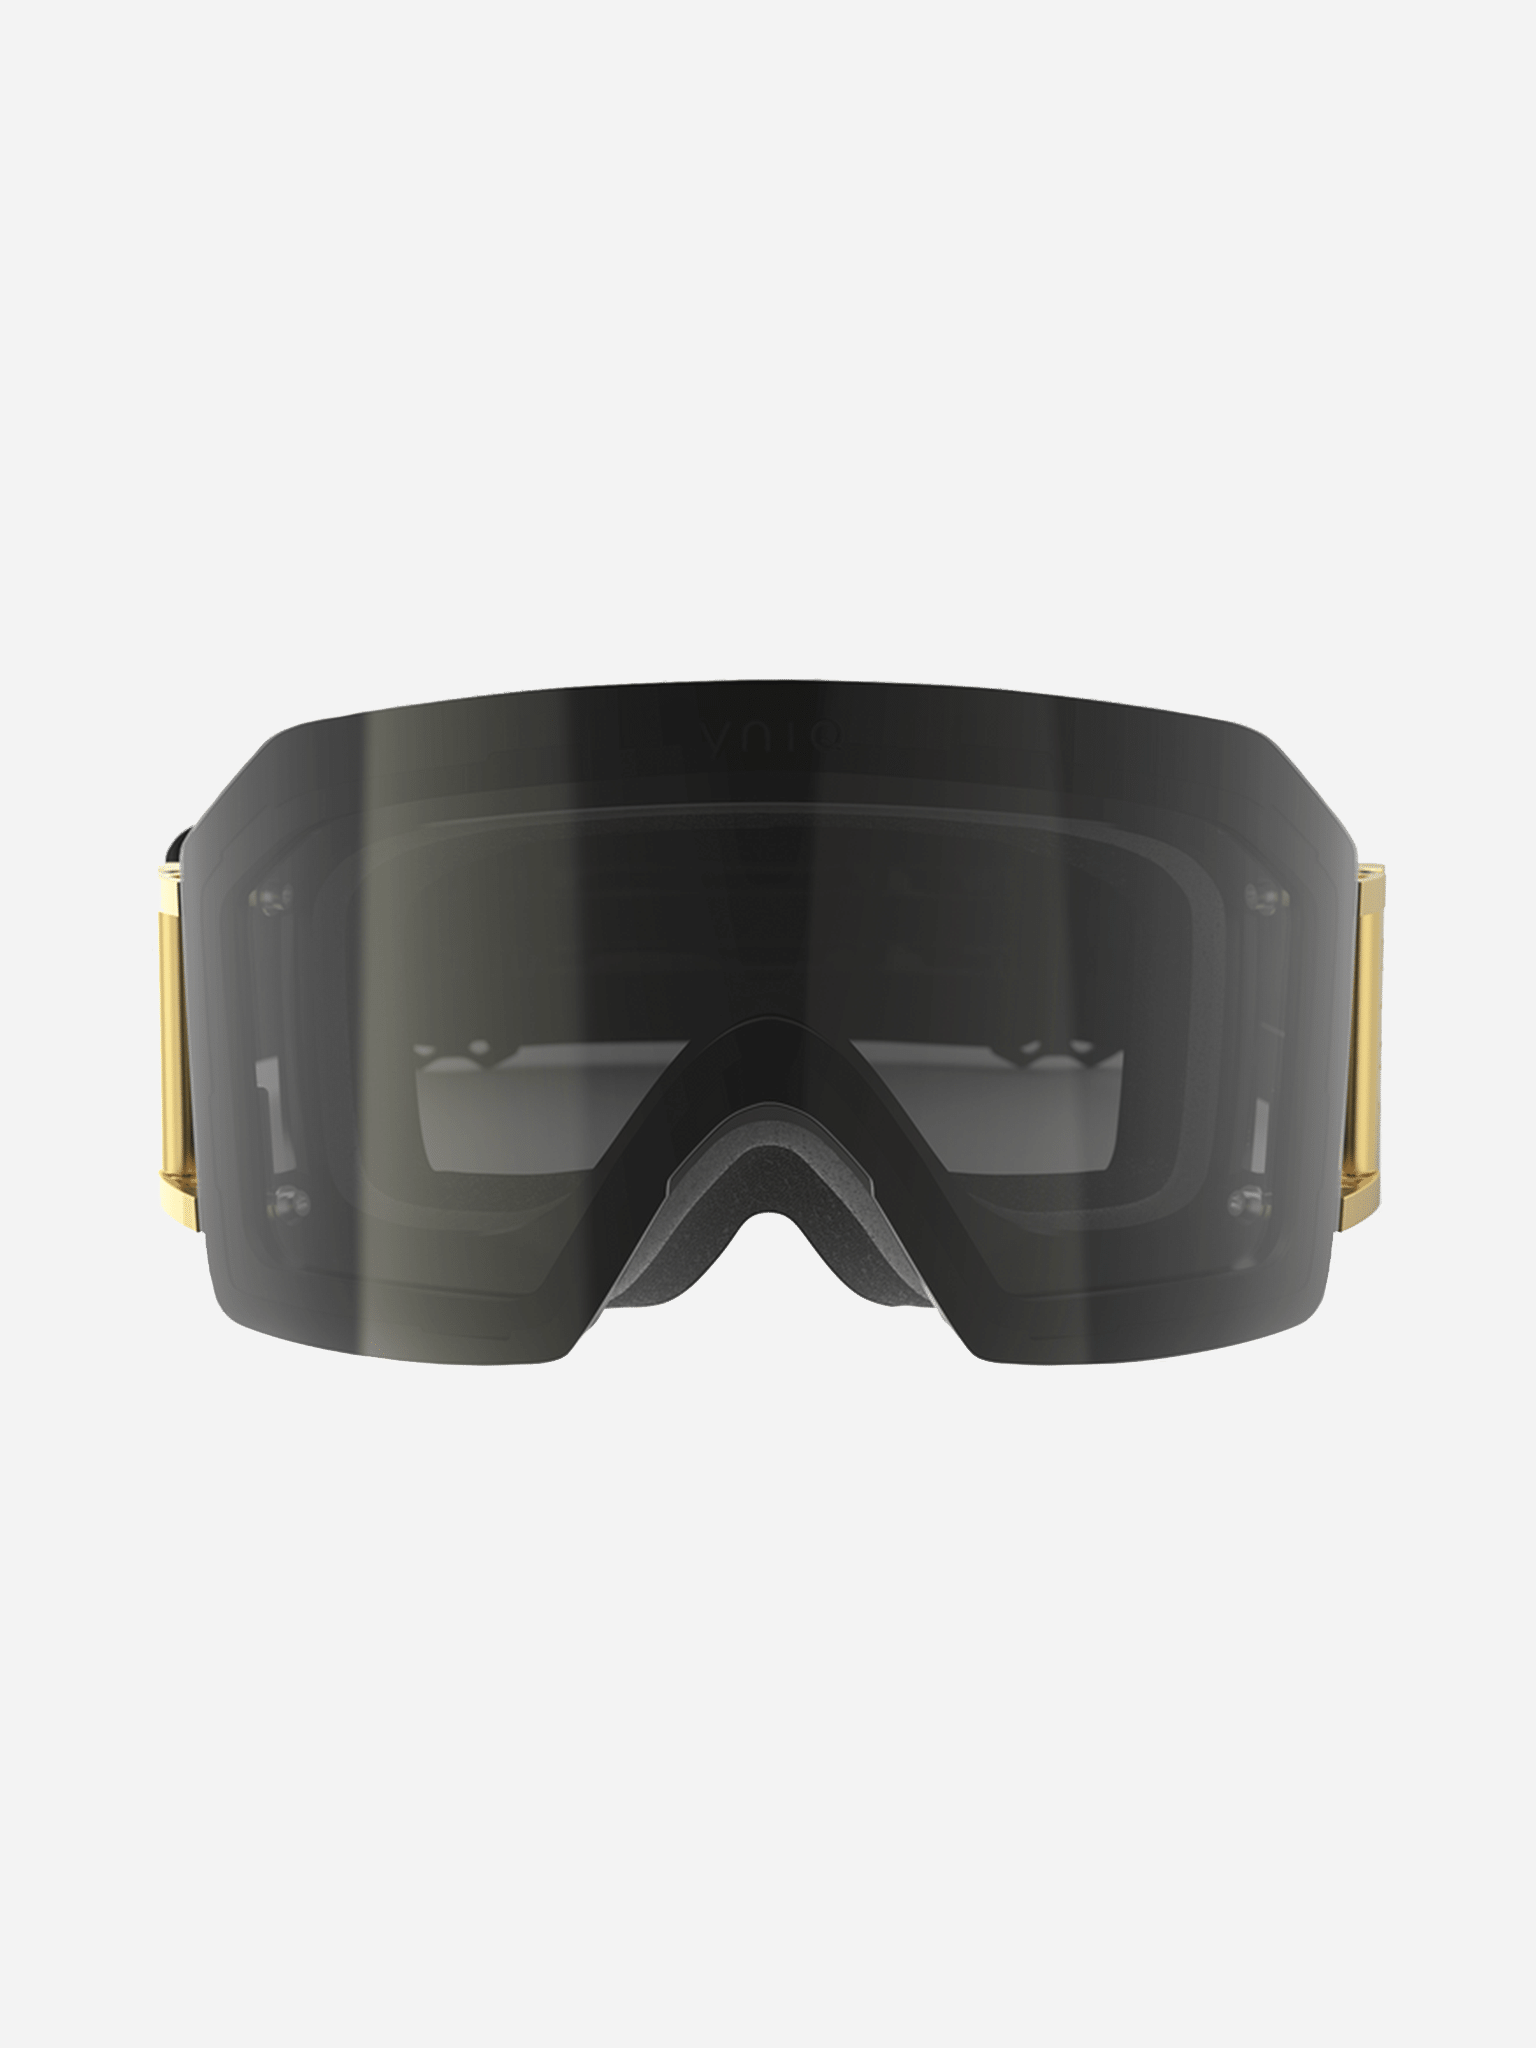 YNIQ Model Nine Black Gold Goggle